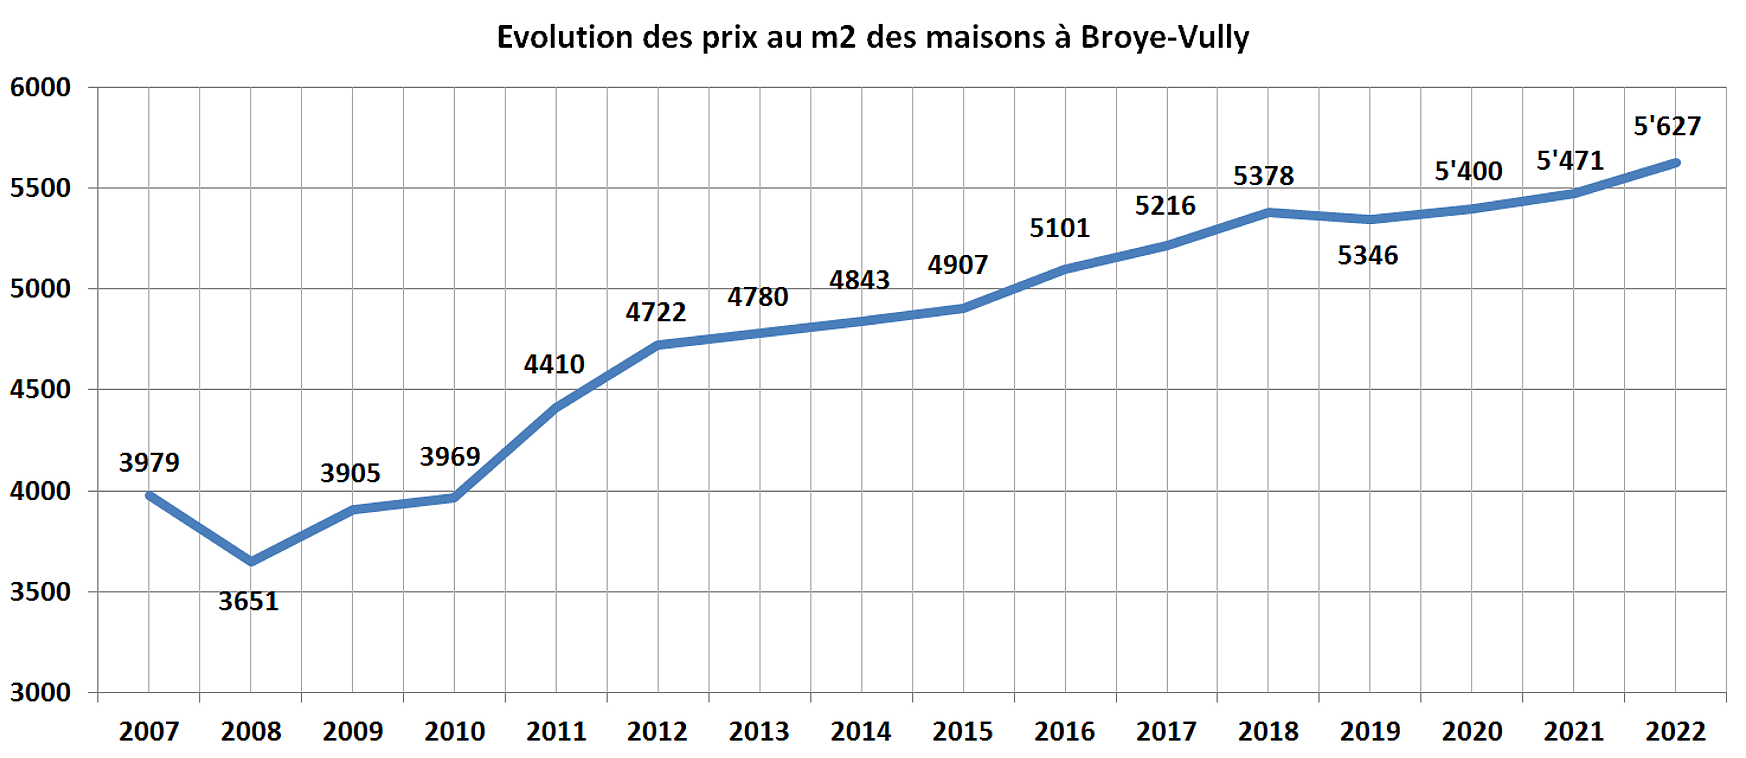 evolution prix m2 maison broye vully 2022